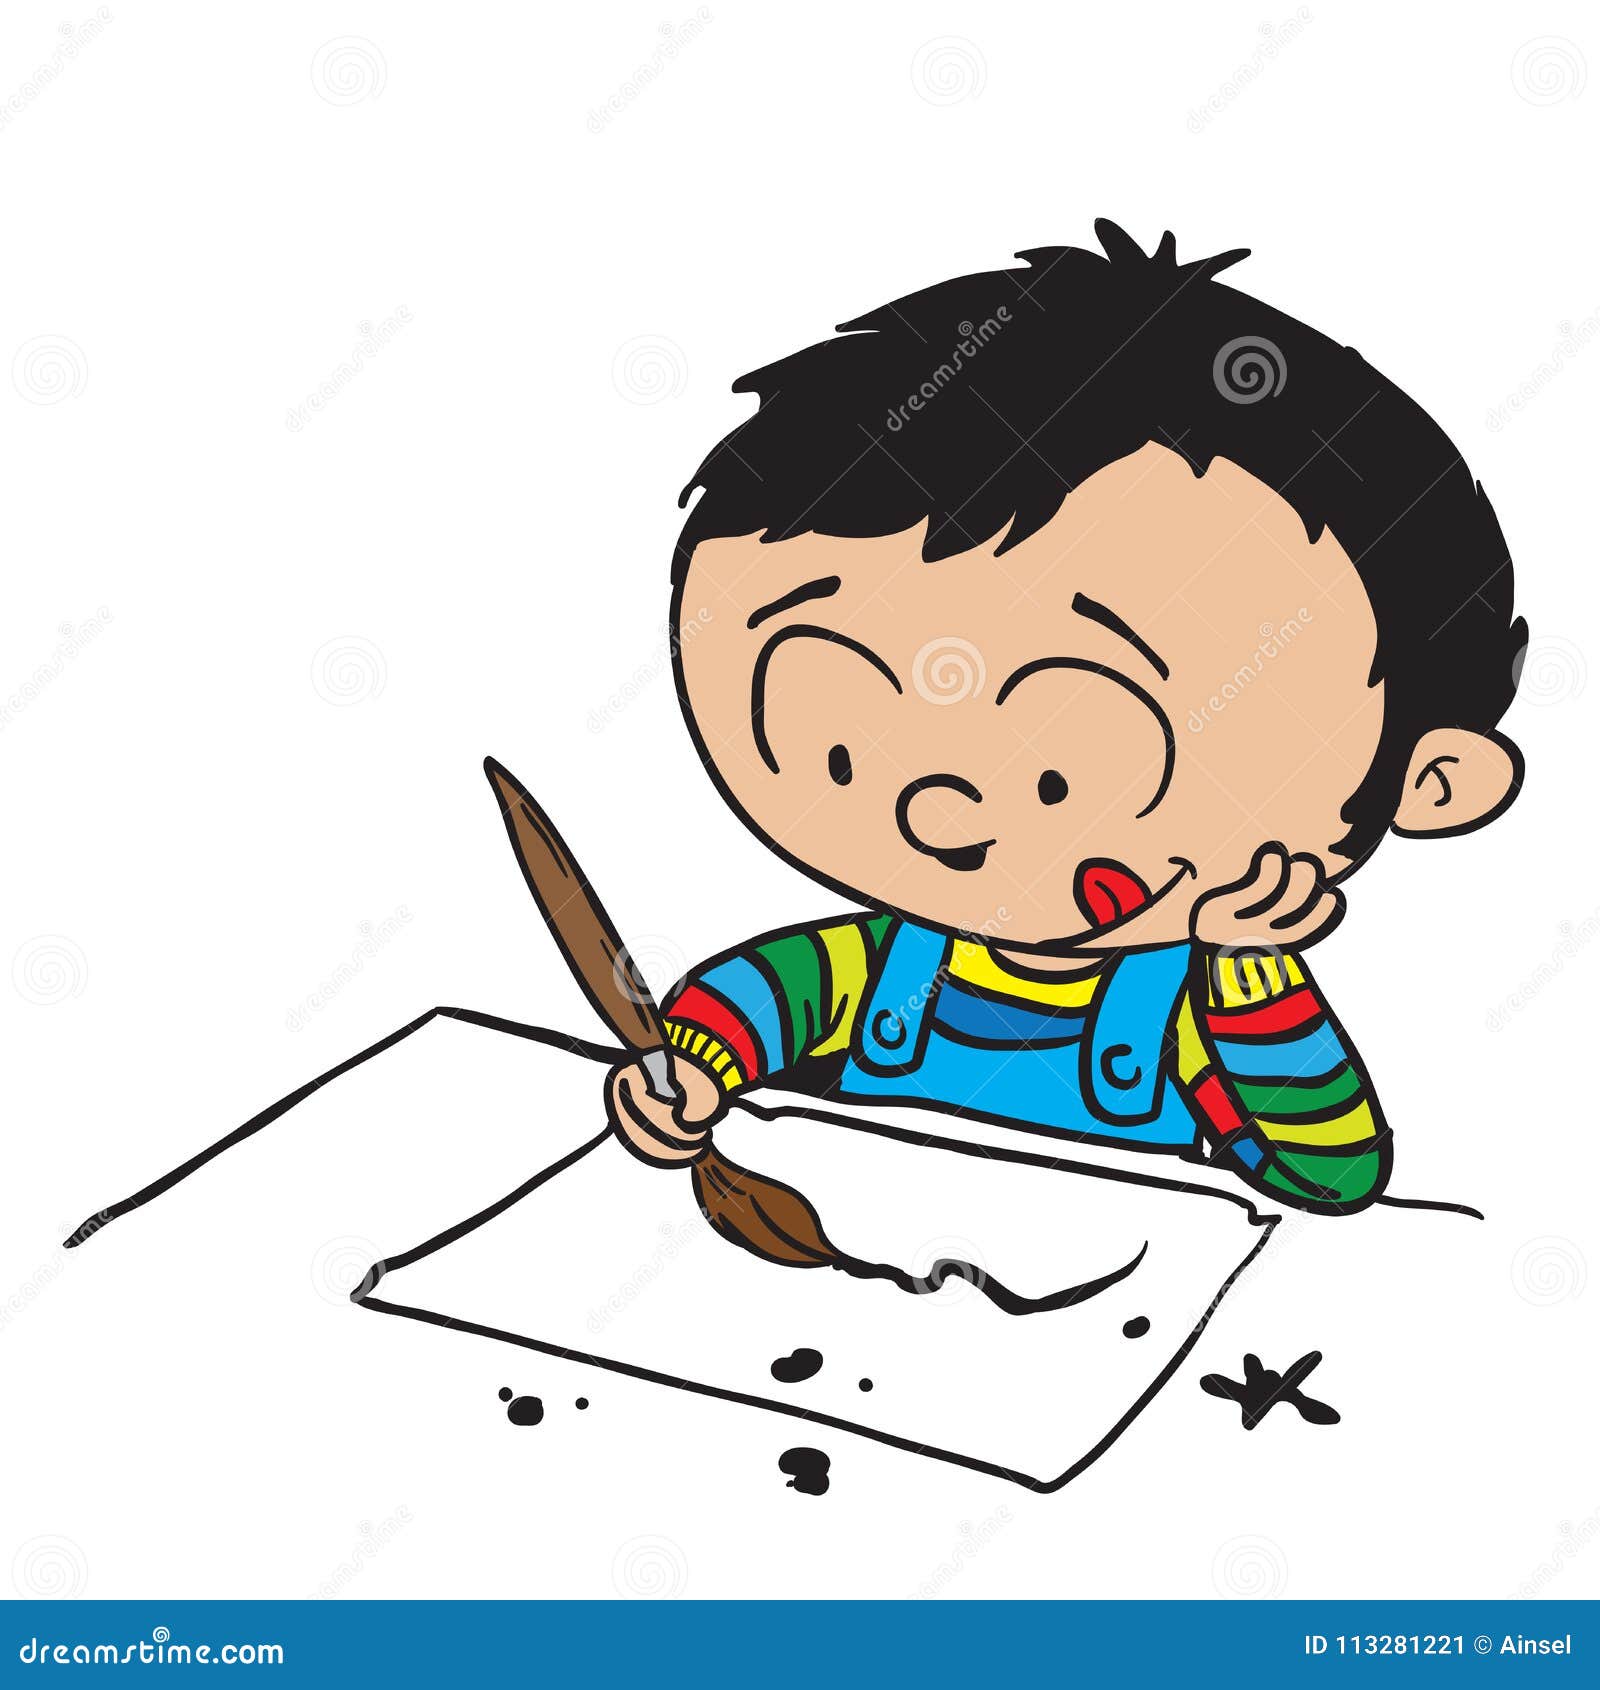 Little boy drawing stock illustration. Illustration of funny - 113281221